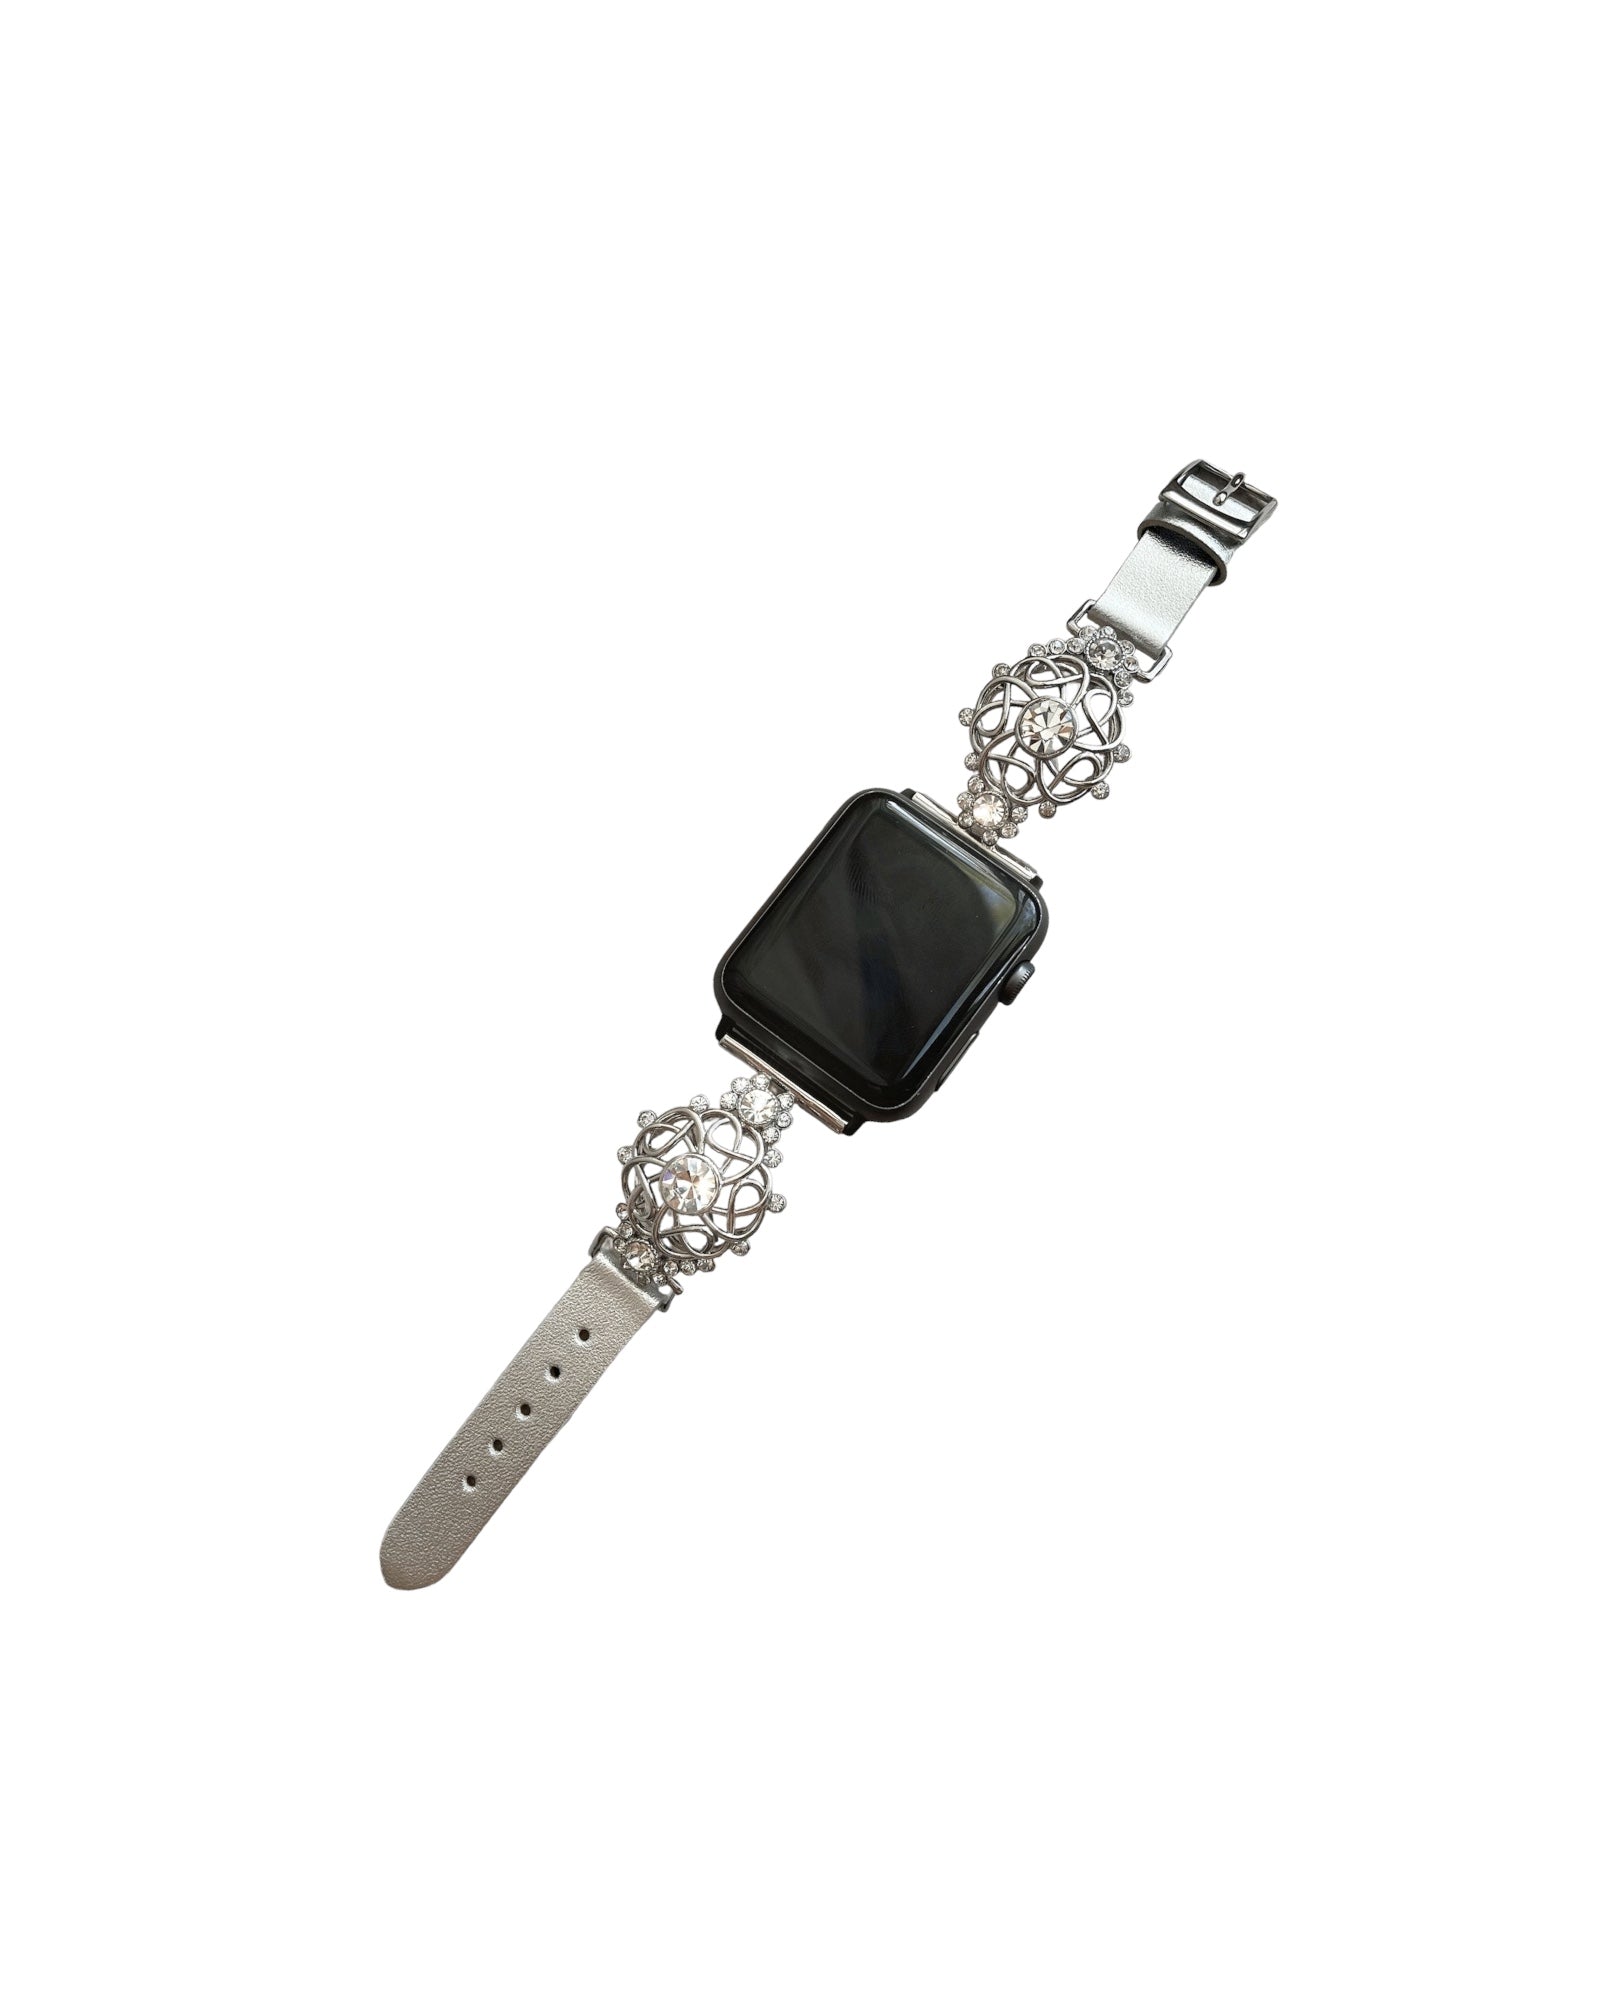 Silver Filigree Bracelet Diamond Accent Watch Band